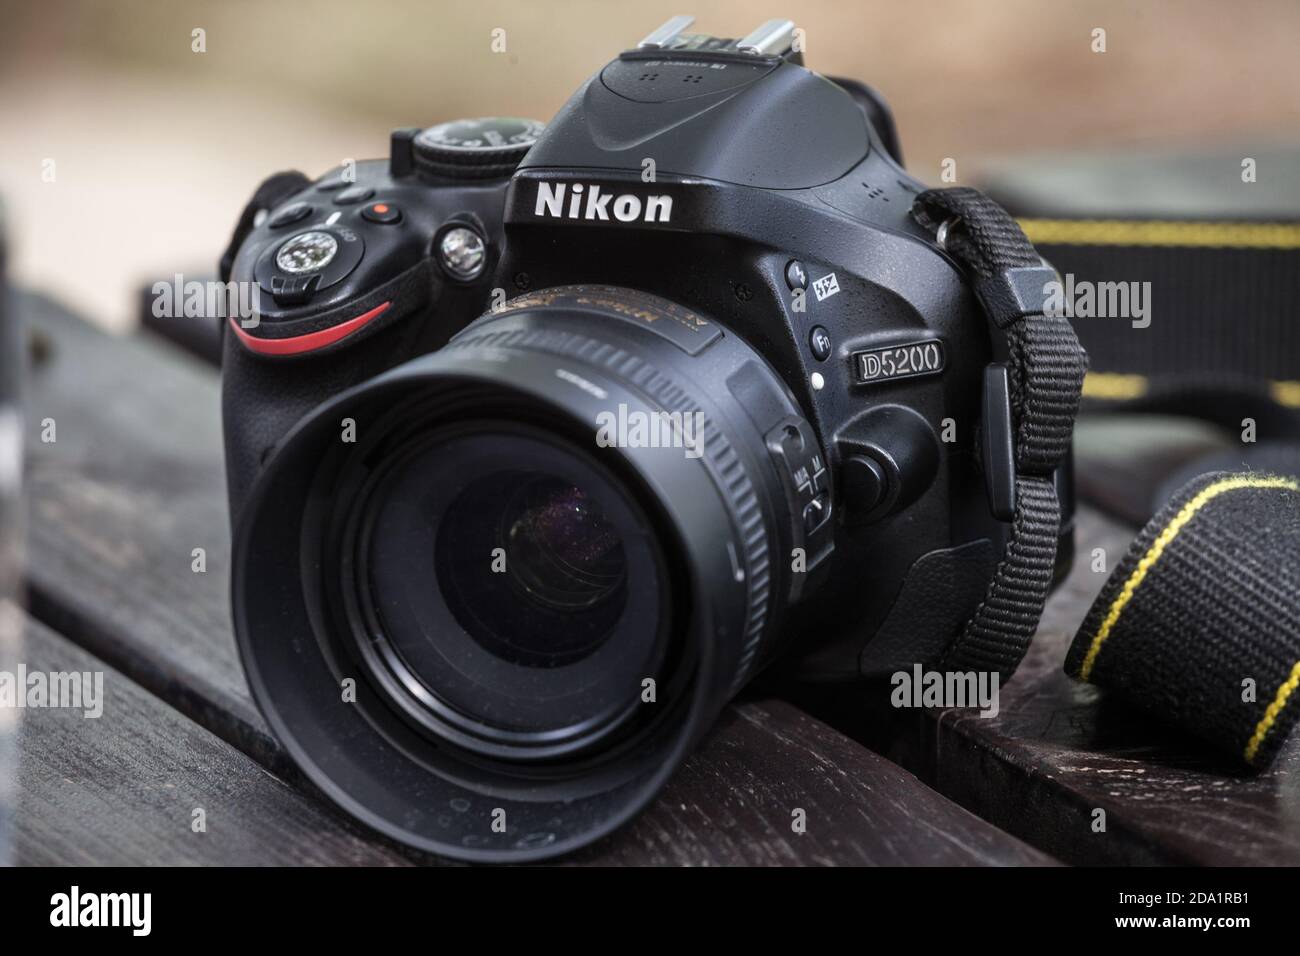 Nikon d5200 hi-res stock photography and images - Alamy